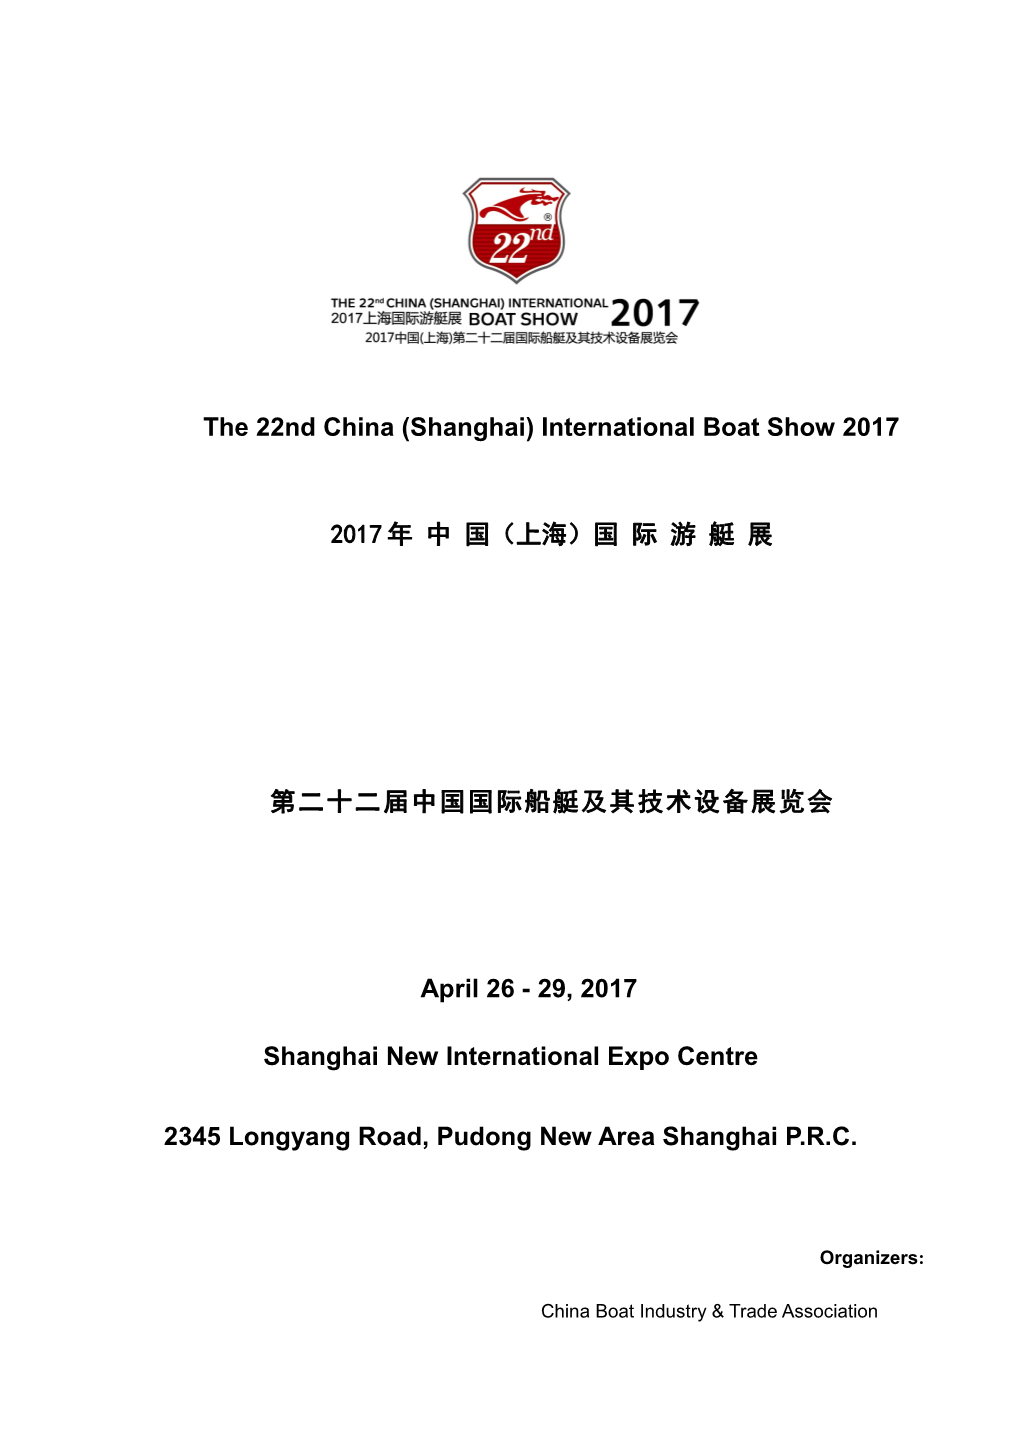 The 22Nd China (Shanghai) International Boat Show 2017